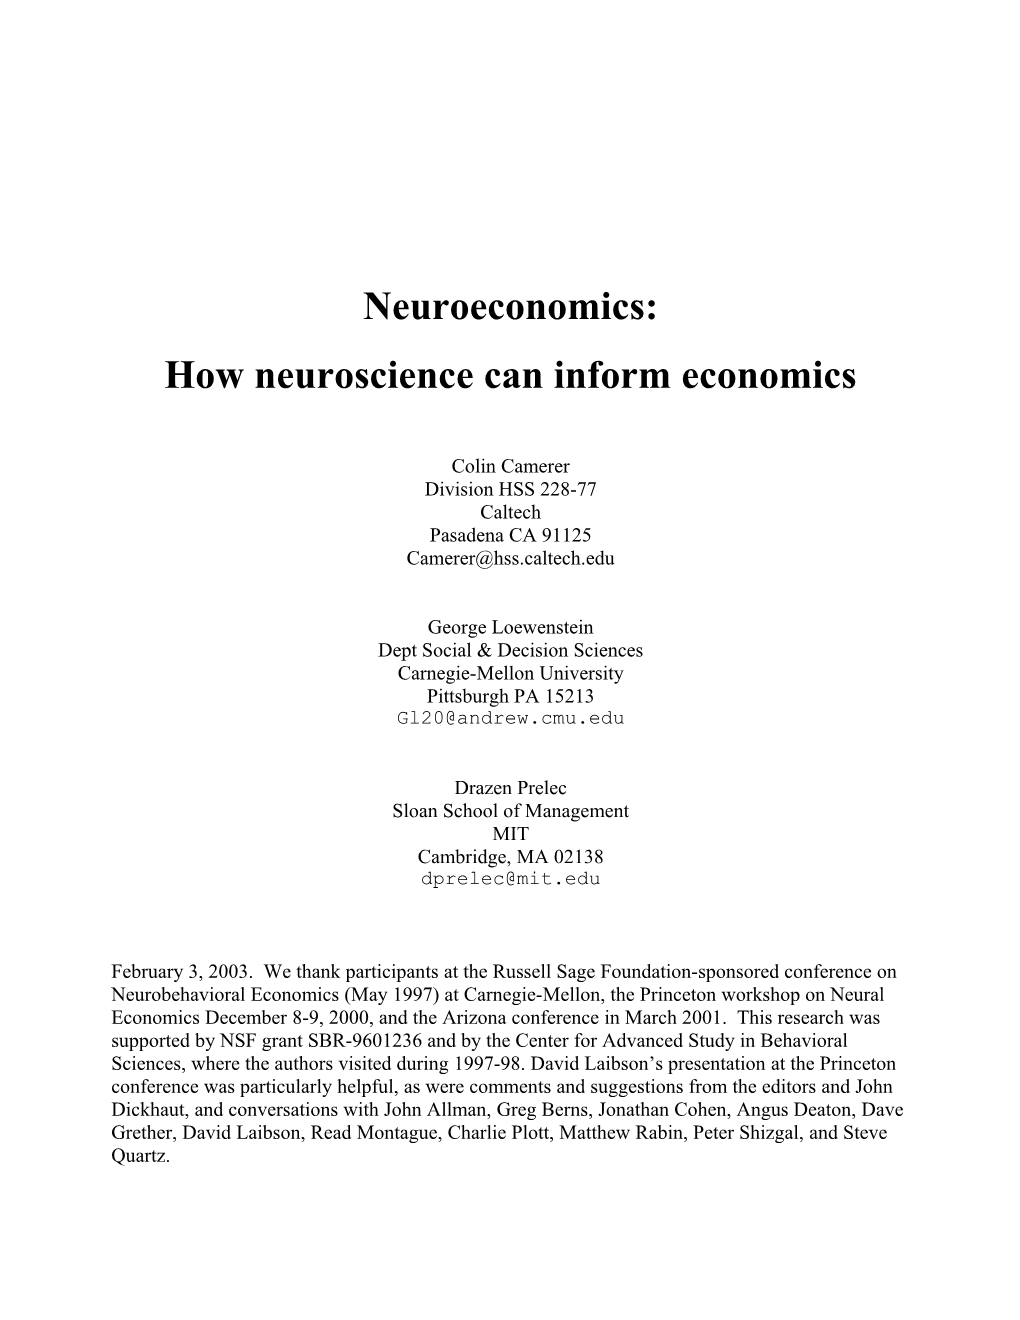 Gray Matters: How Neuroscience Can Inform Economics